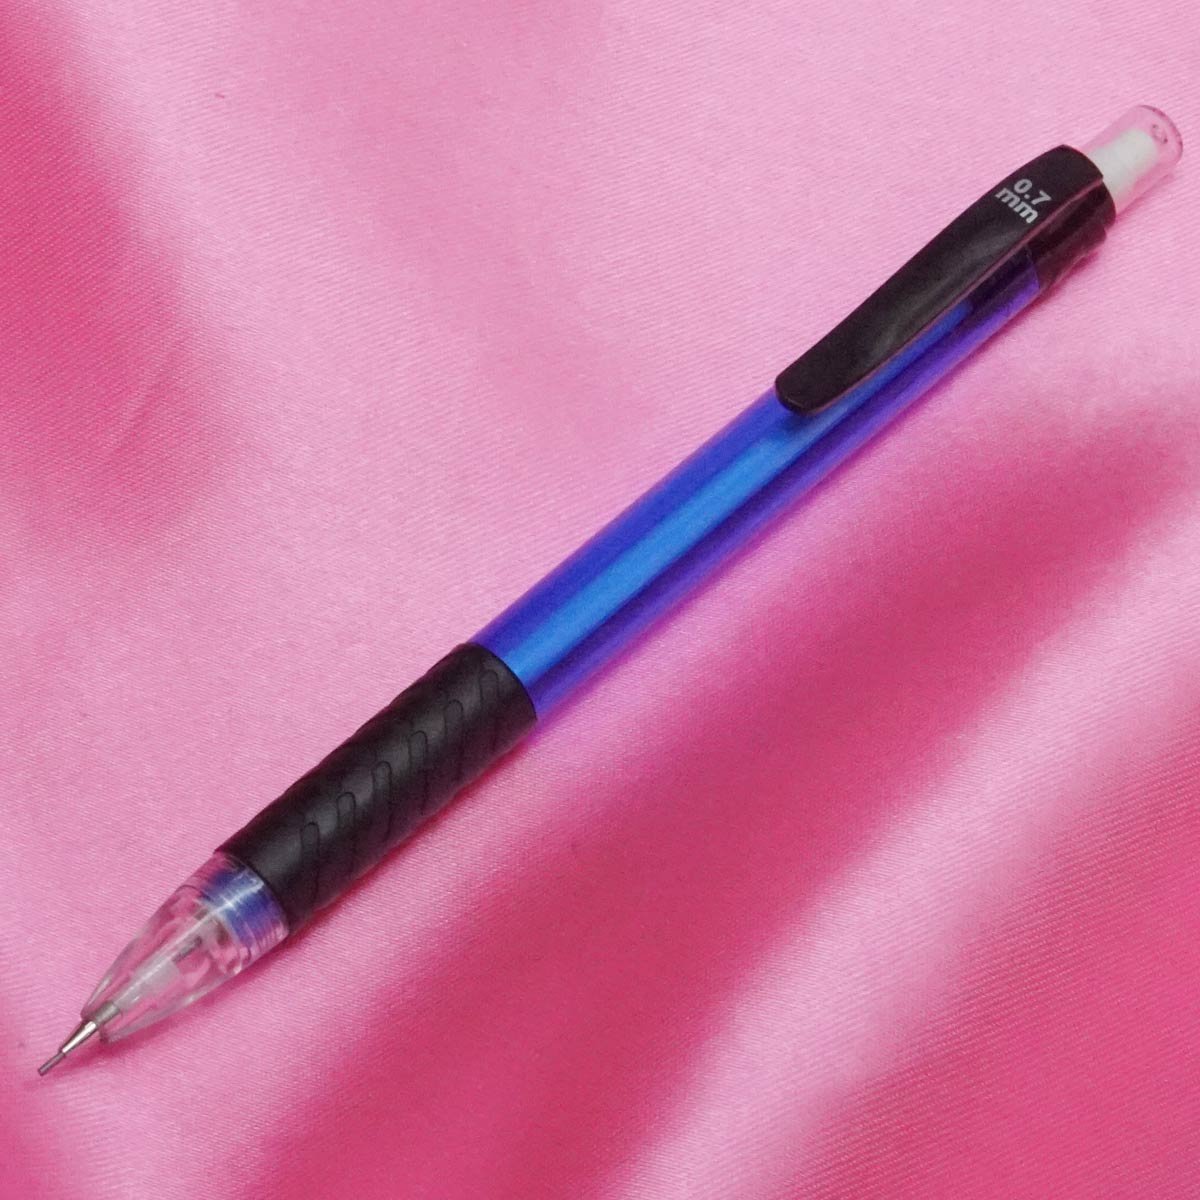 Cello Supreme 0.7mm Transparent Blue Color Body With Eraser Led Pencil SKU 21424